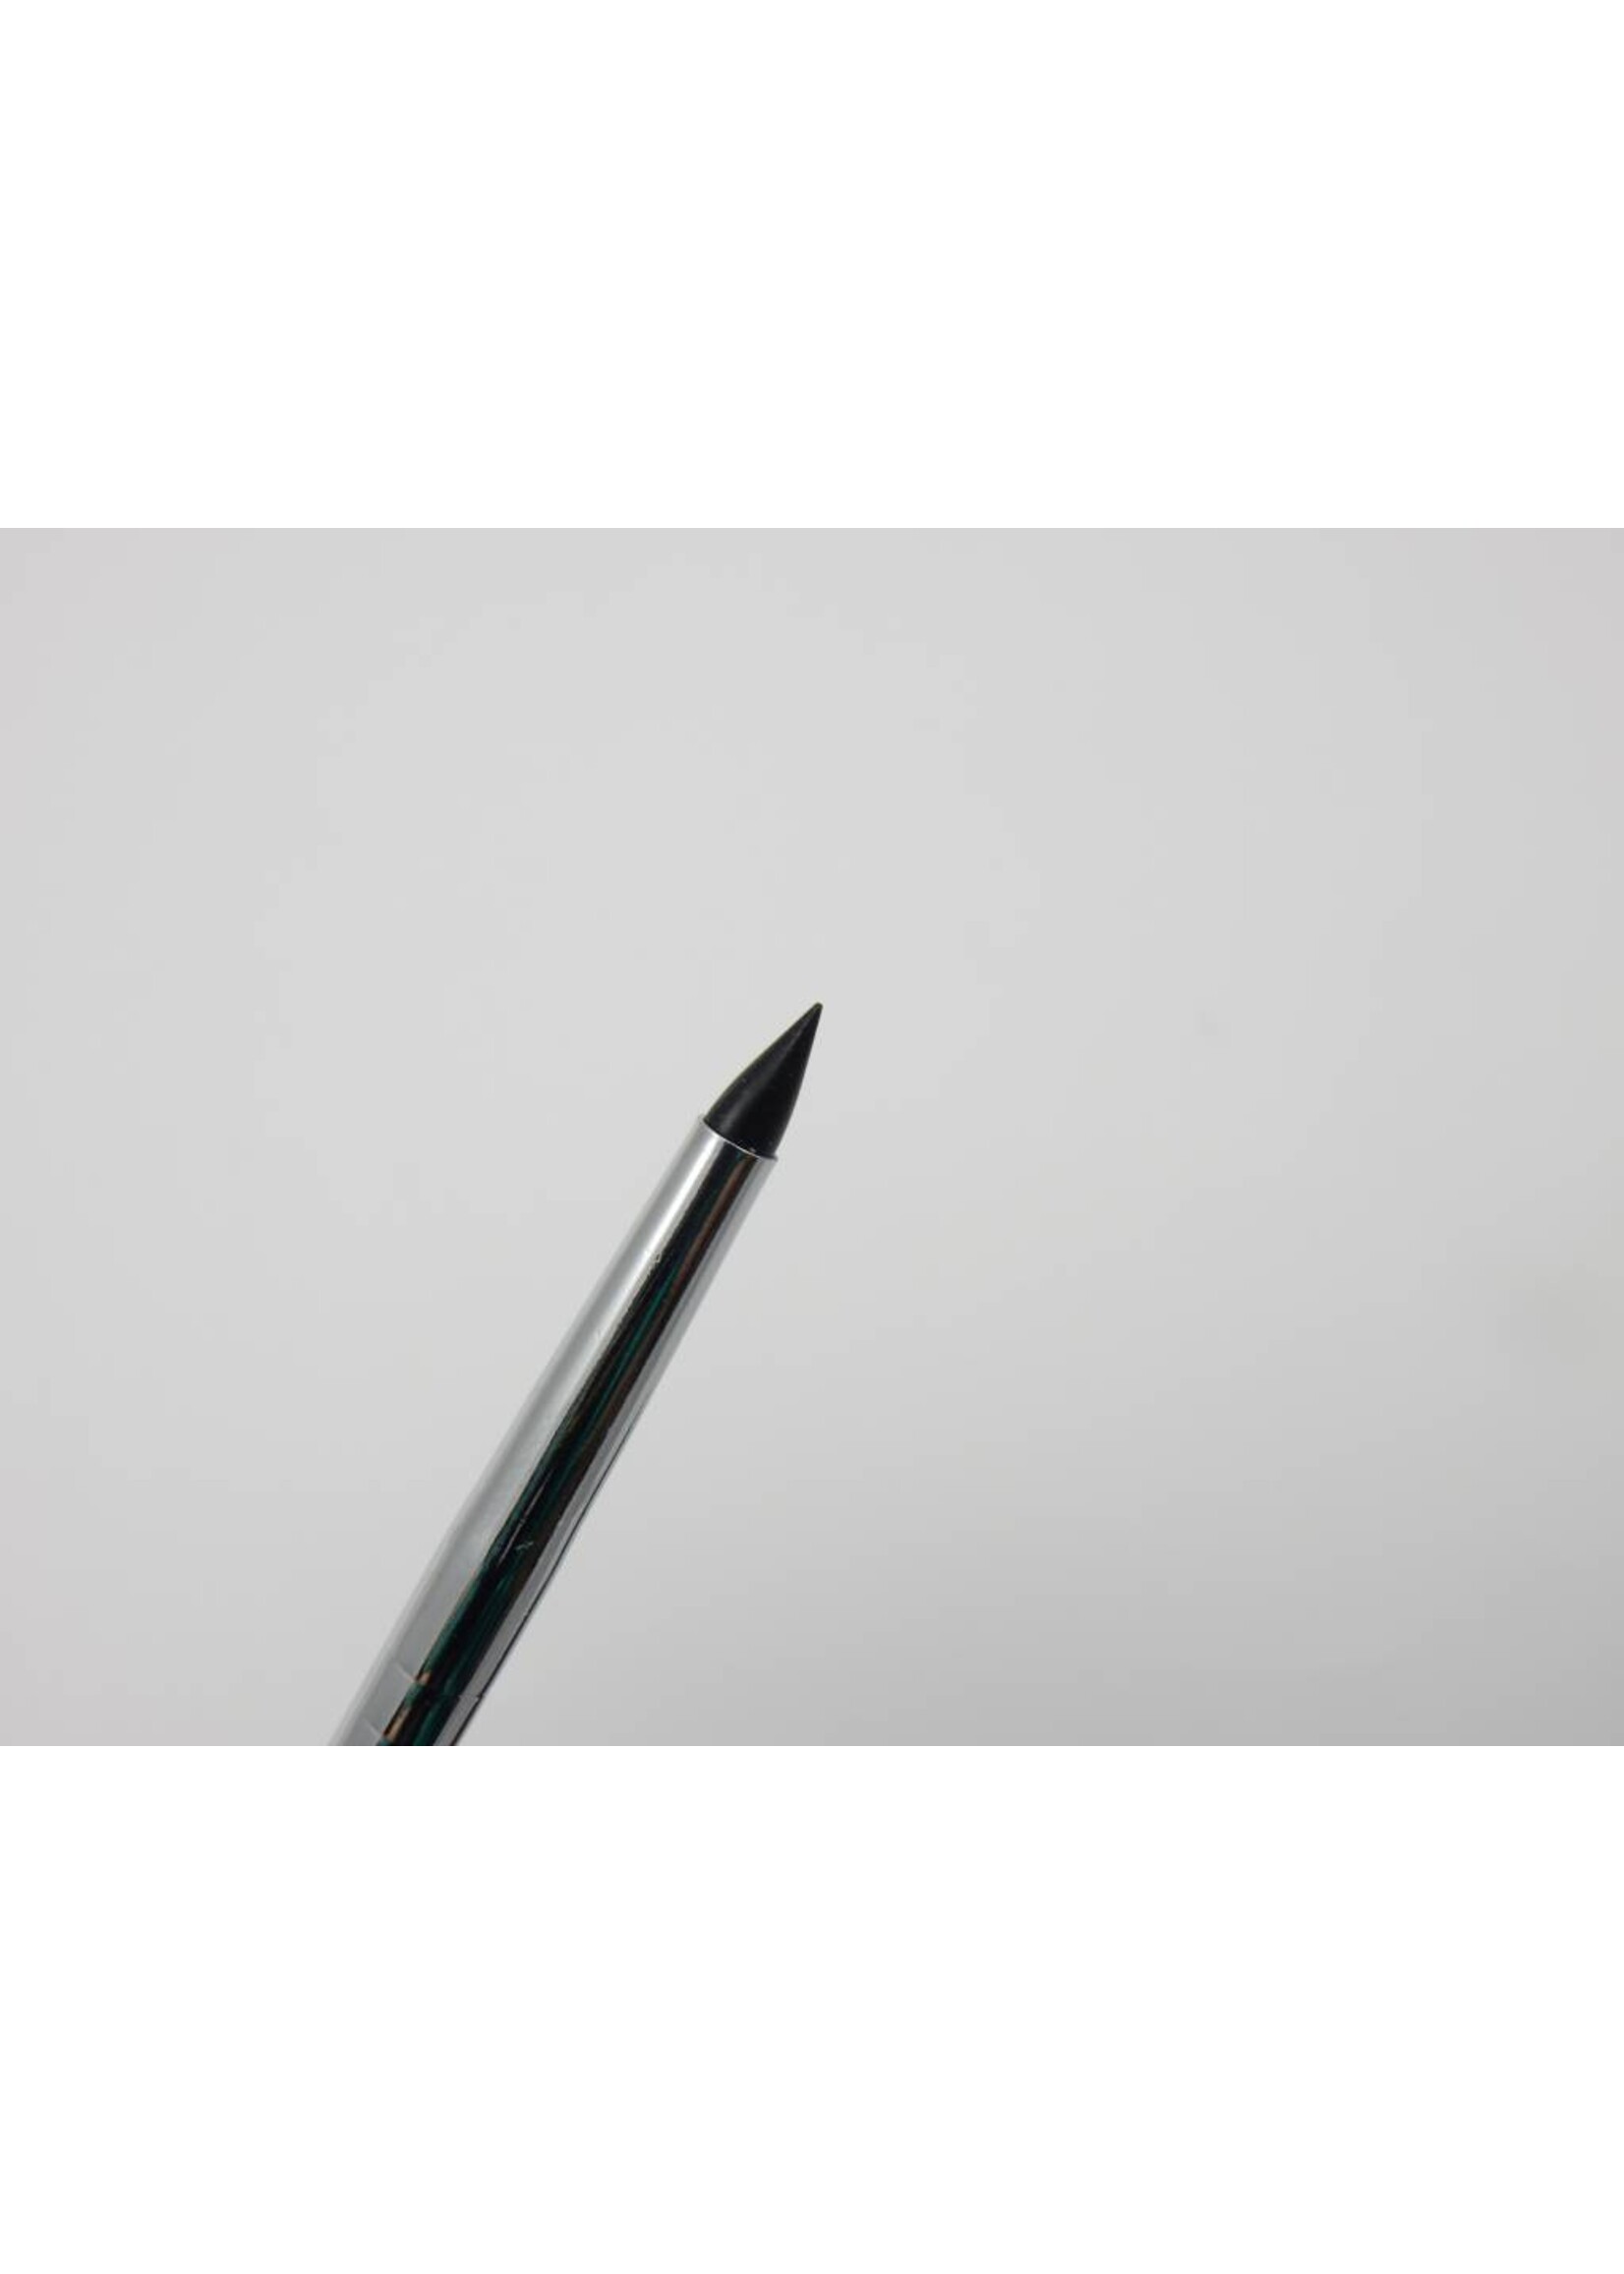 Modelling pencil - silicon tip